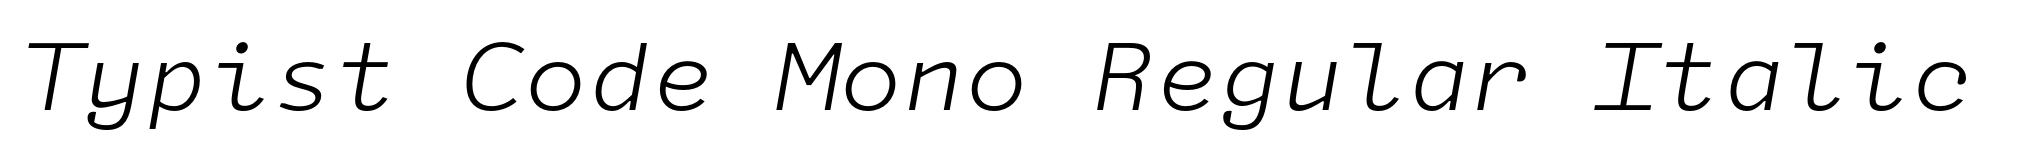 Typist Code Mono Regular Italic image